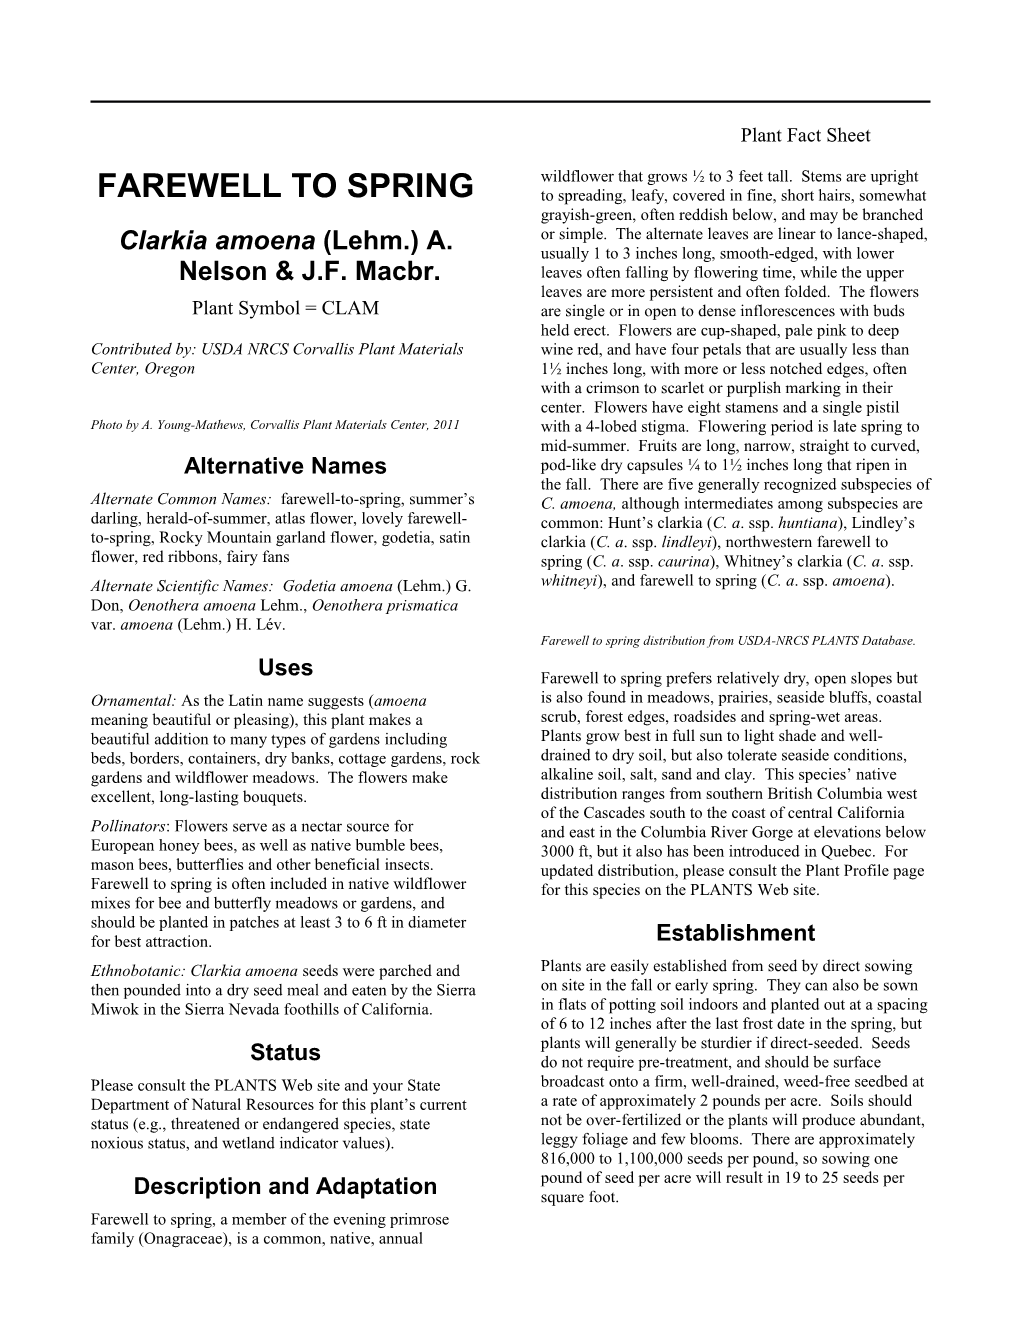 Plant Fact Sheet for Farewell to Spring (Clarkia Amoena)